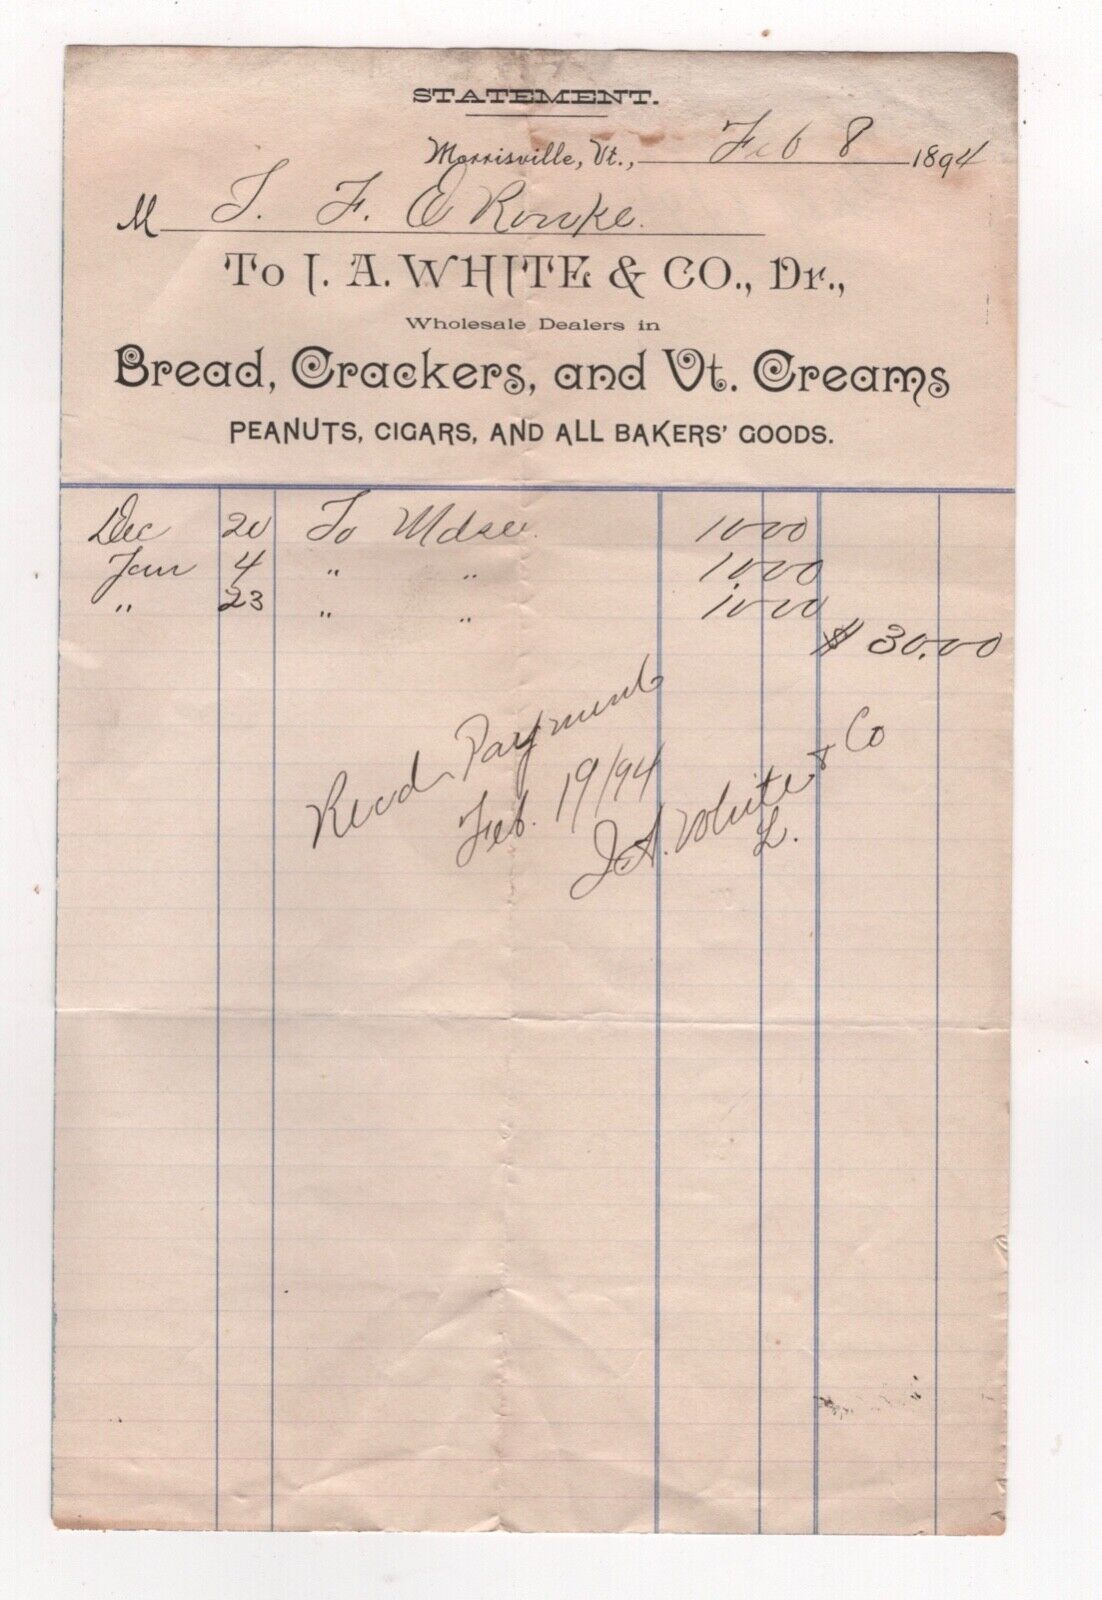 1894 WHITE CO BILLHEAD BREAD CRACKERS VT CREAMS PEANUTS CIGARS MORRISVILLE VT